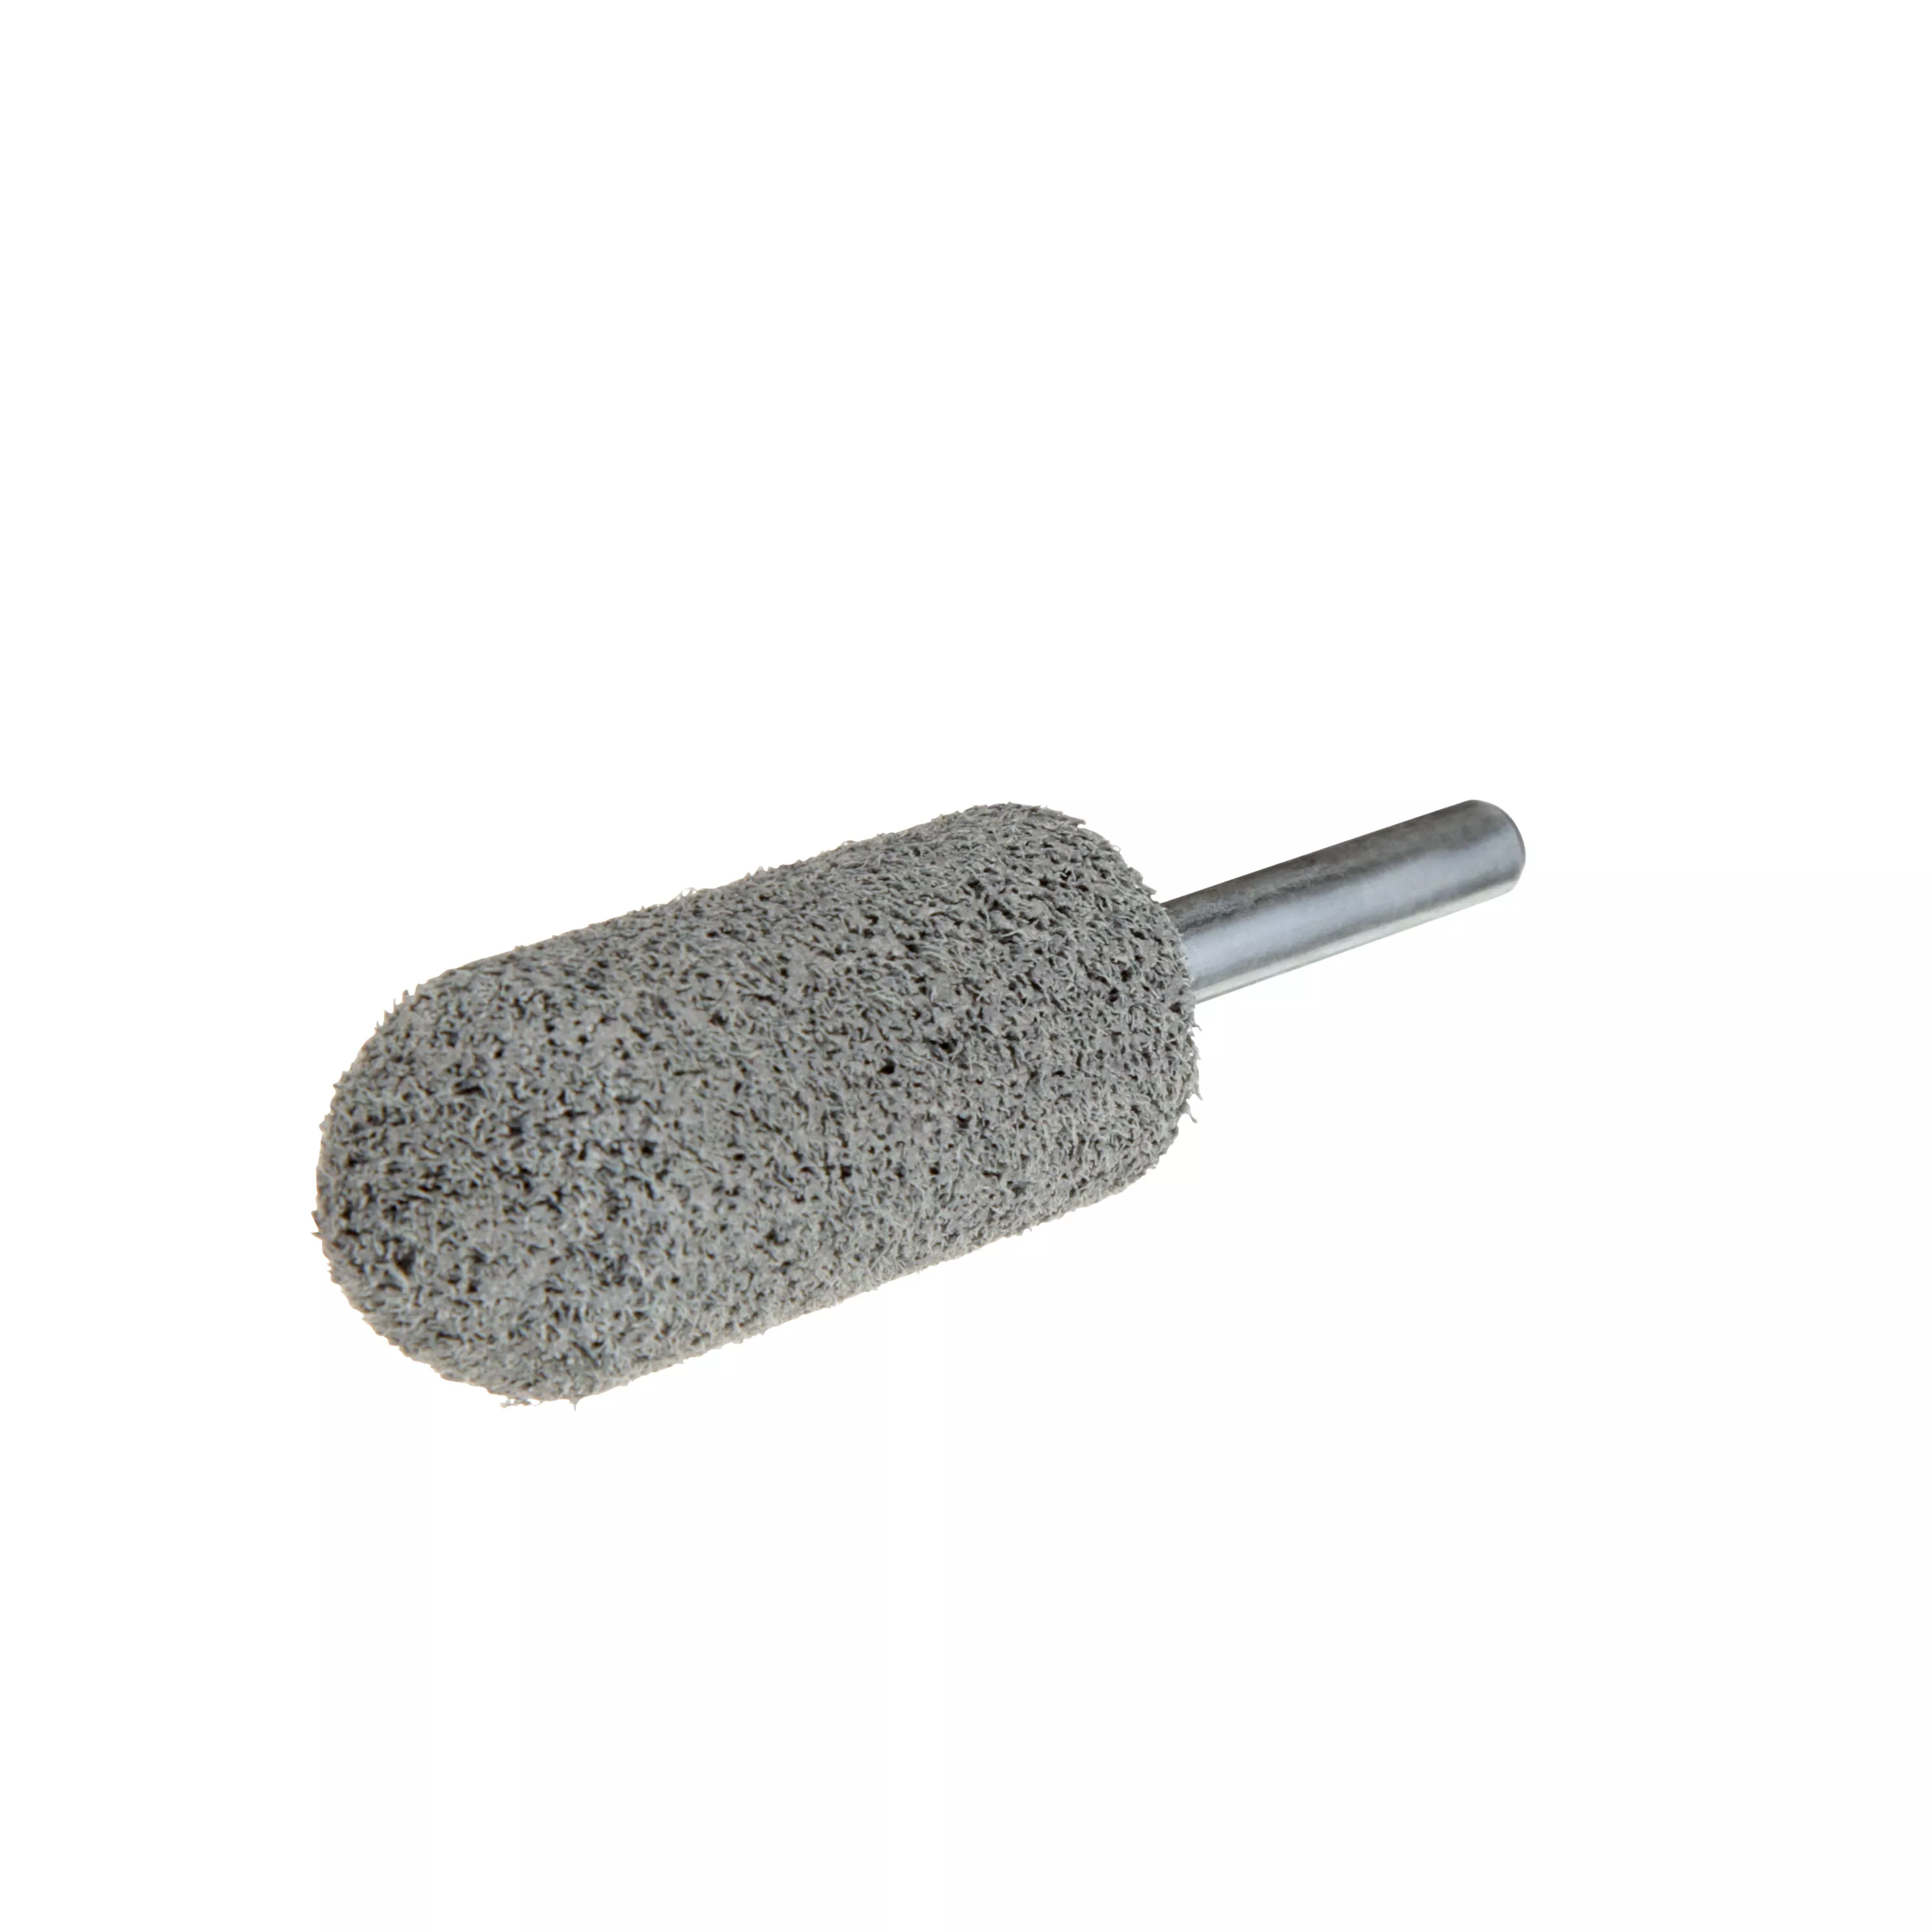 Standard Abrasives™ Unitized Mounted Point 877061, 732 A11 x 1/4 in,
5/Carton, 50 ea/Case